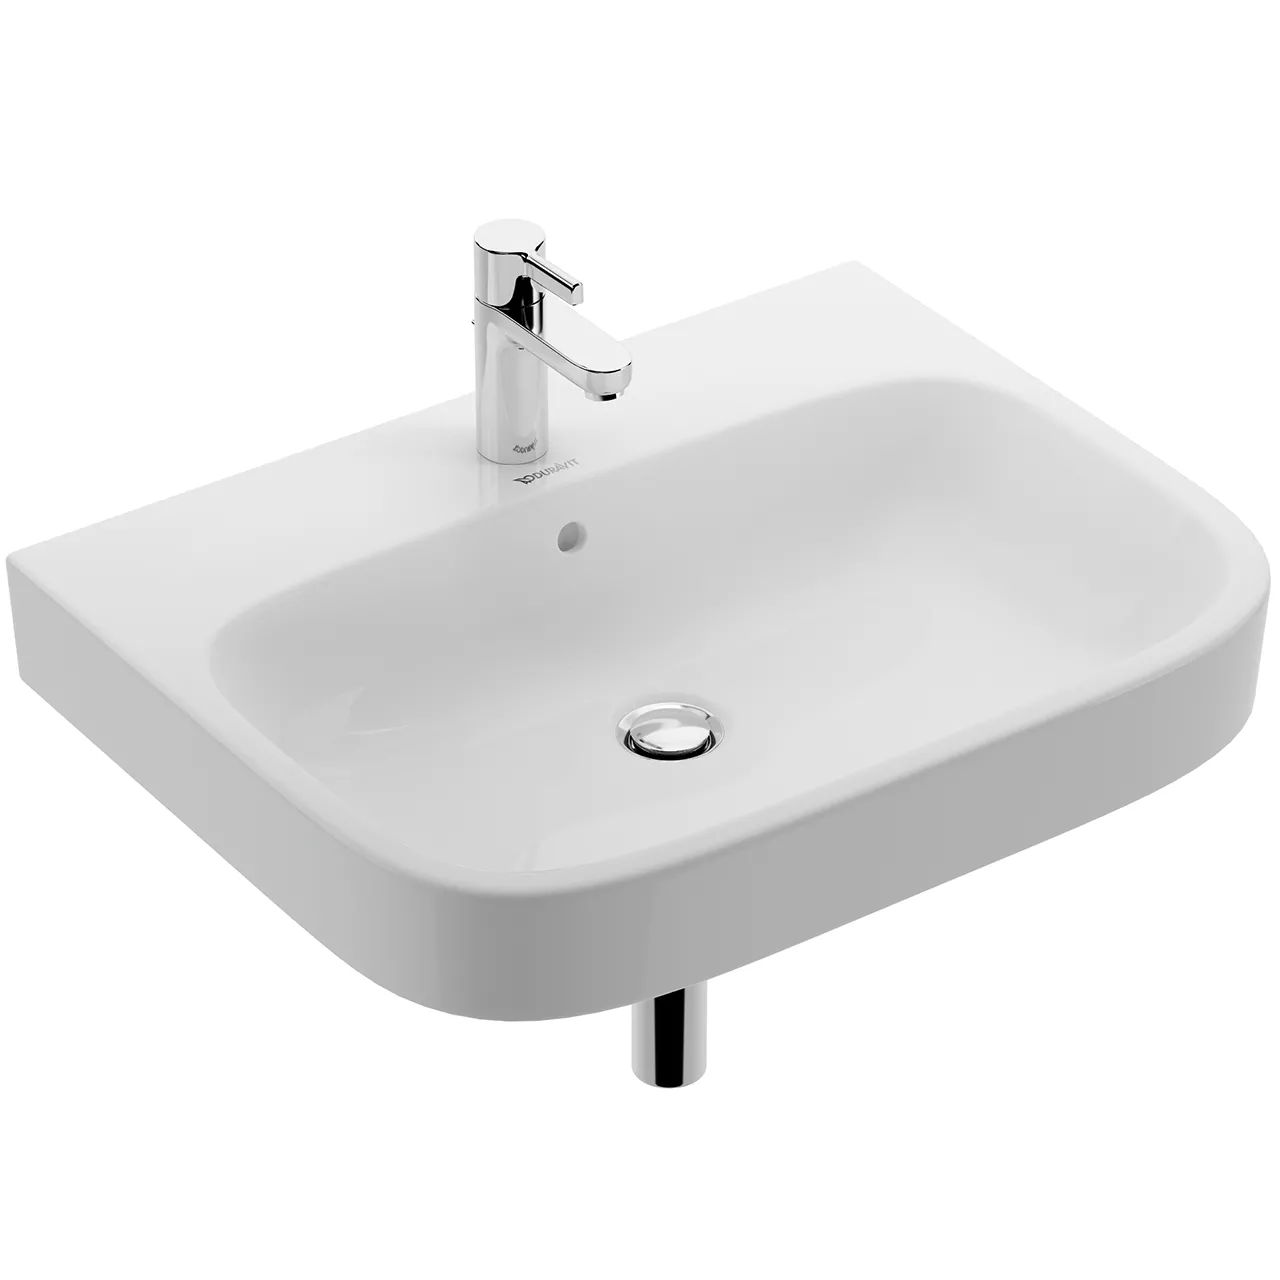 Bathroom – happy-d2-2318-washbasin-by-duravit